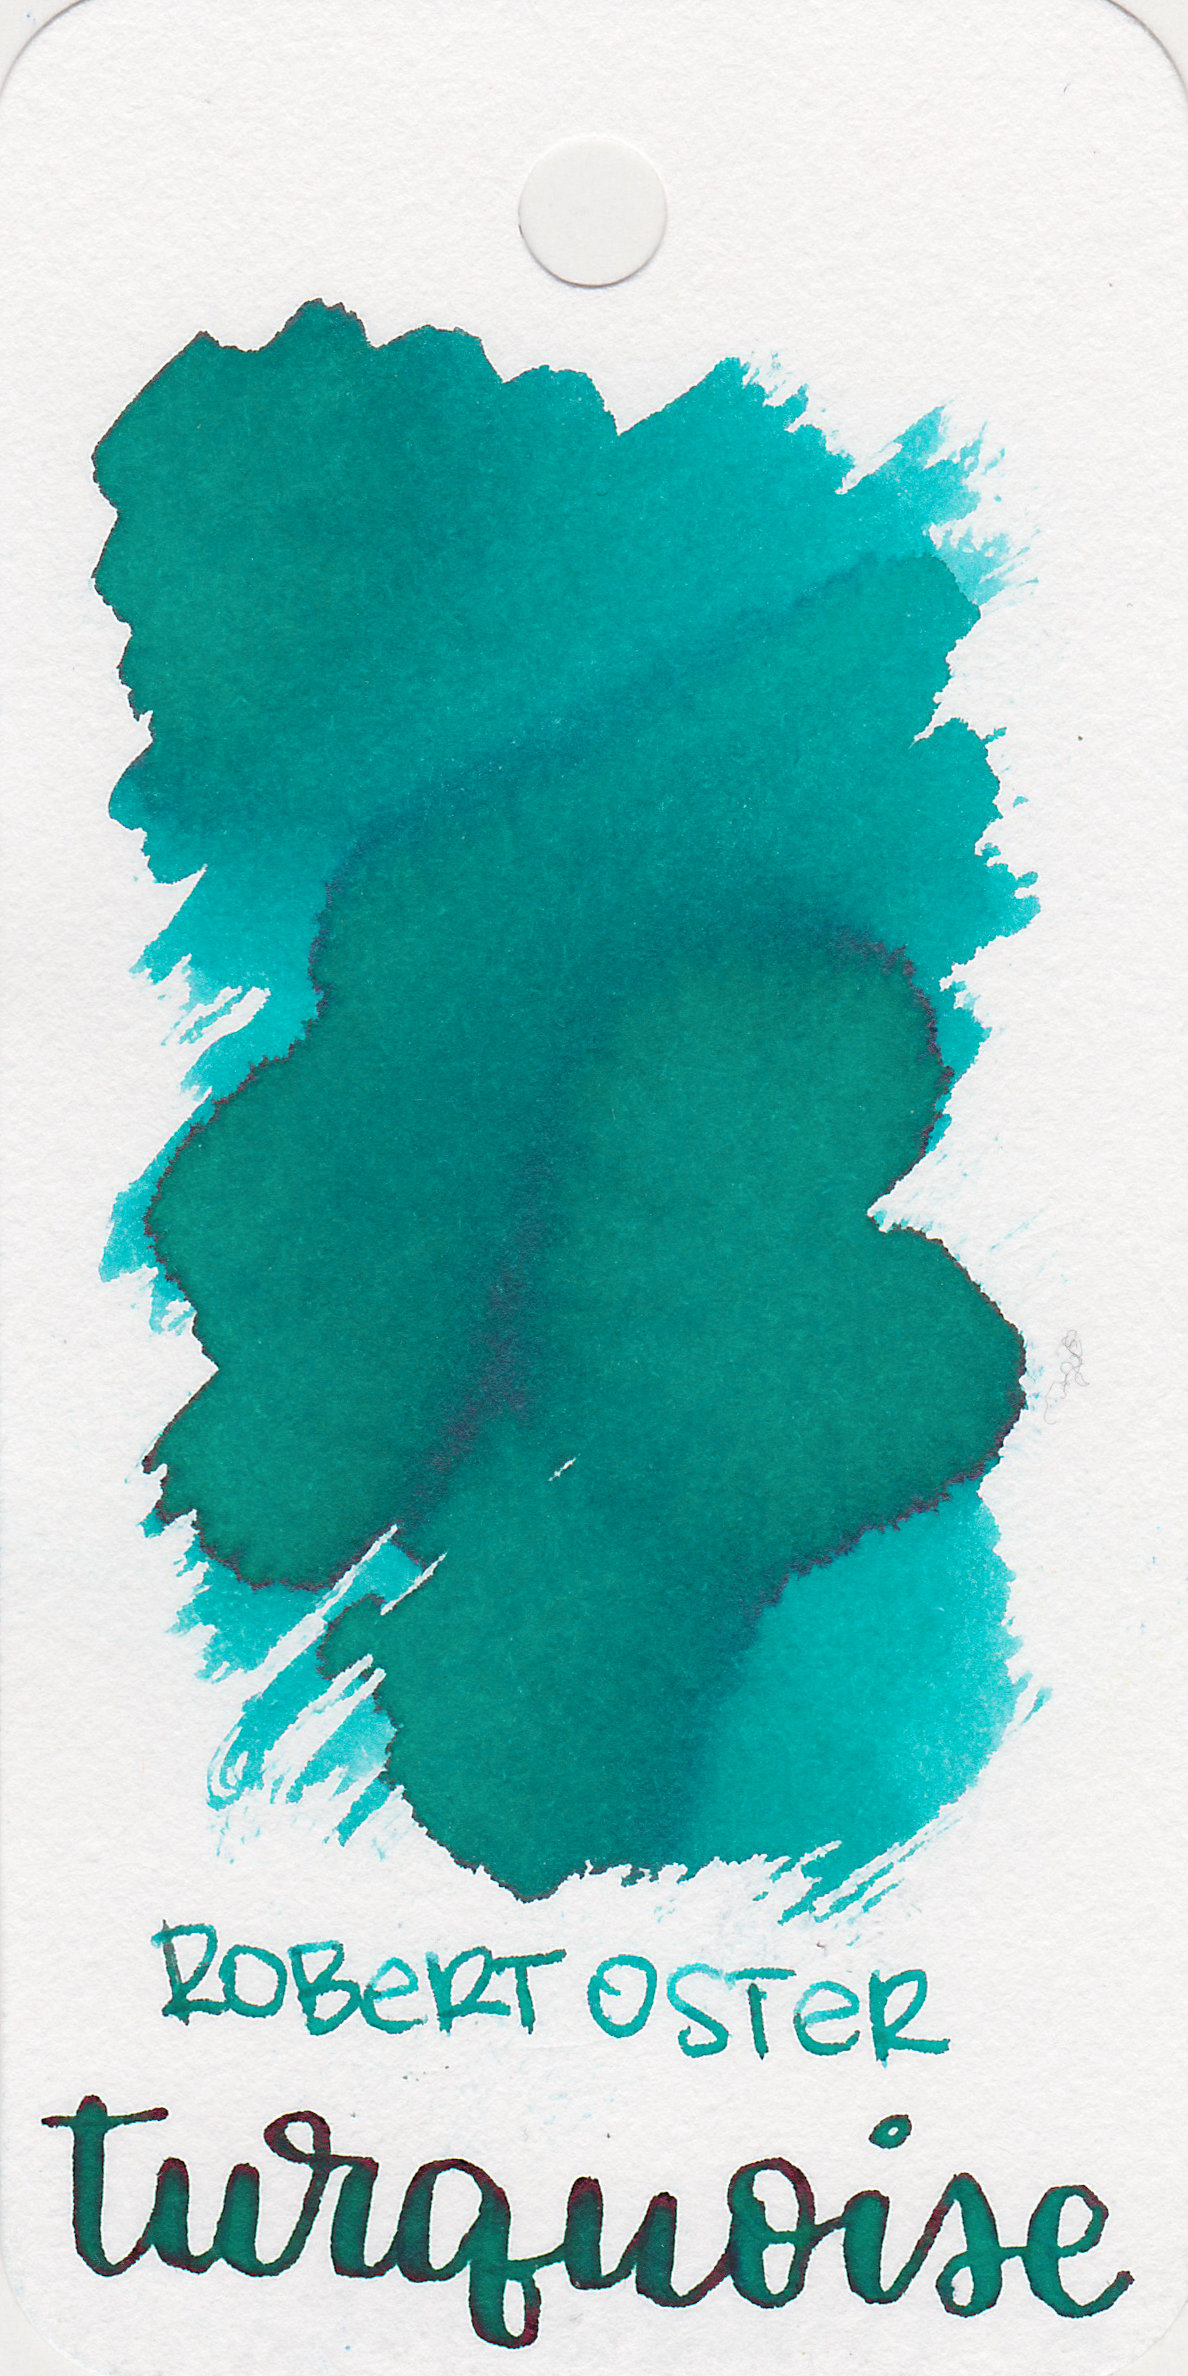 ro-turquoise-1.jpg